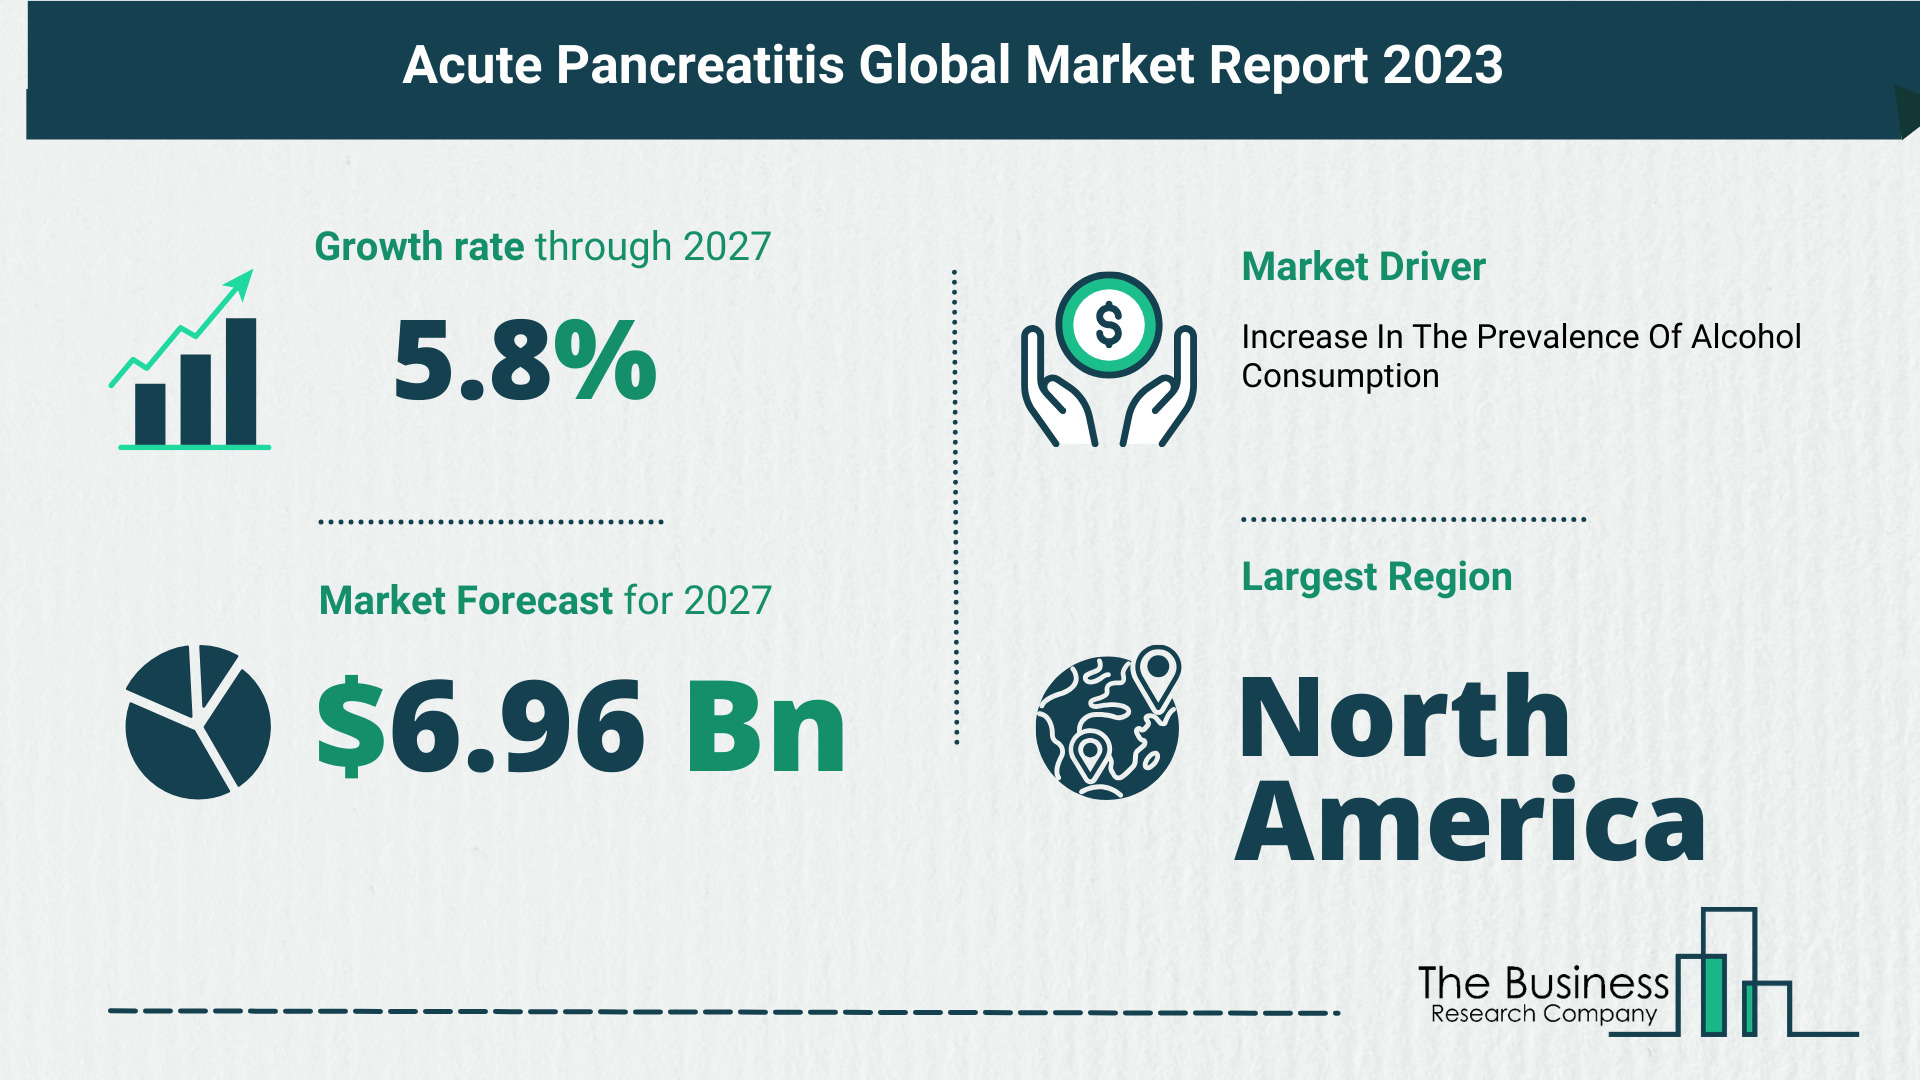 Global Acute Pancreatitis Market